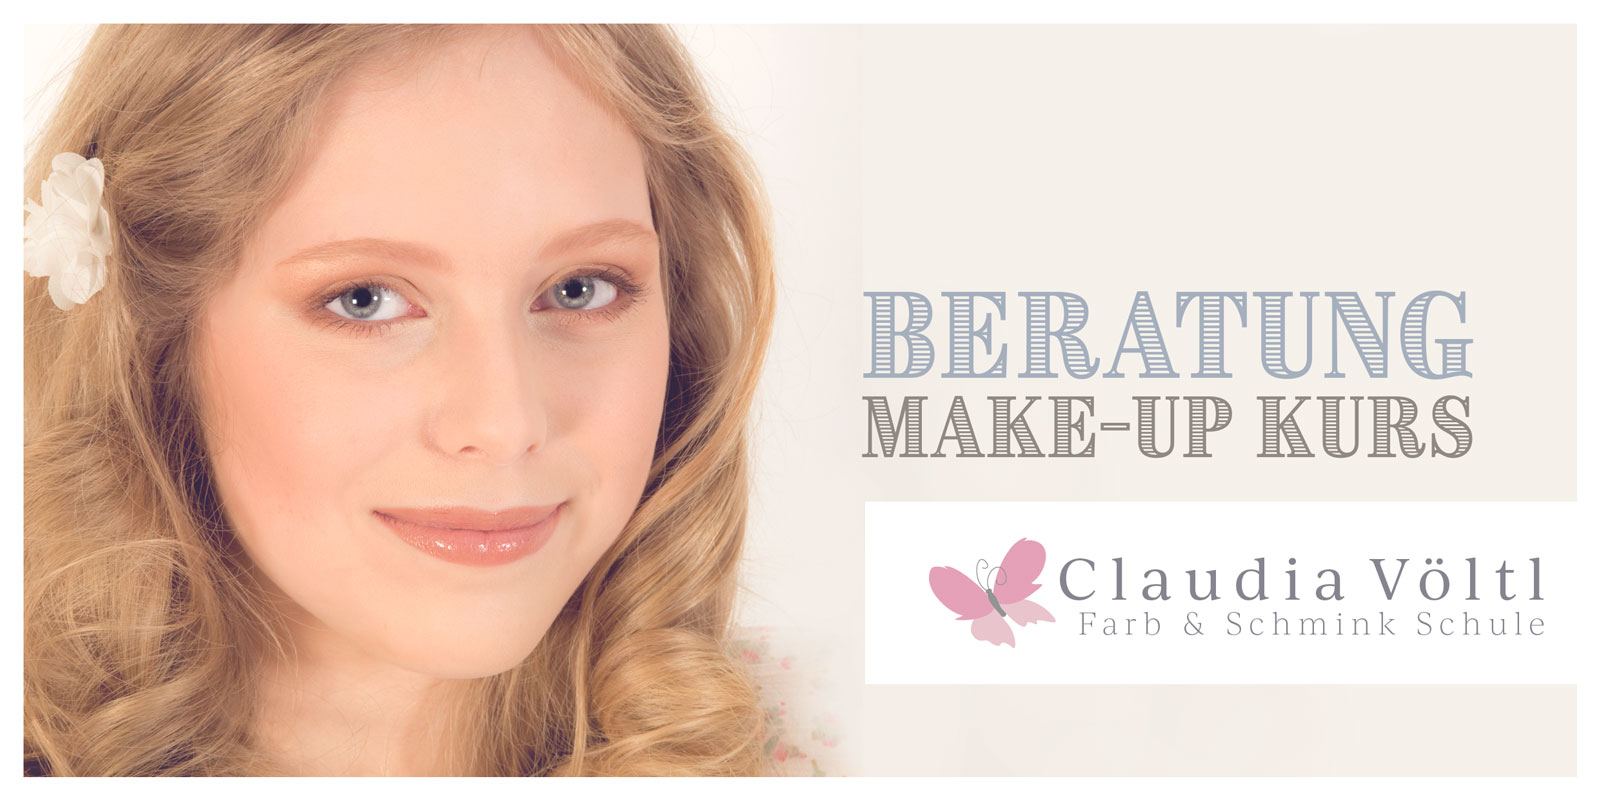 Flyer Beratung Makeup Kurs - Styling